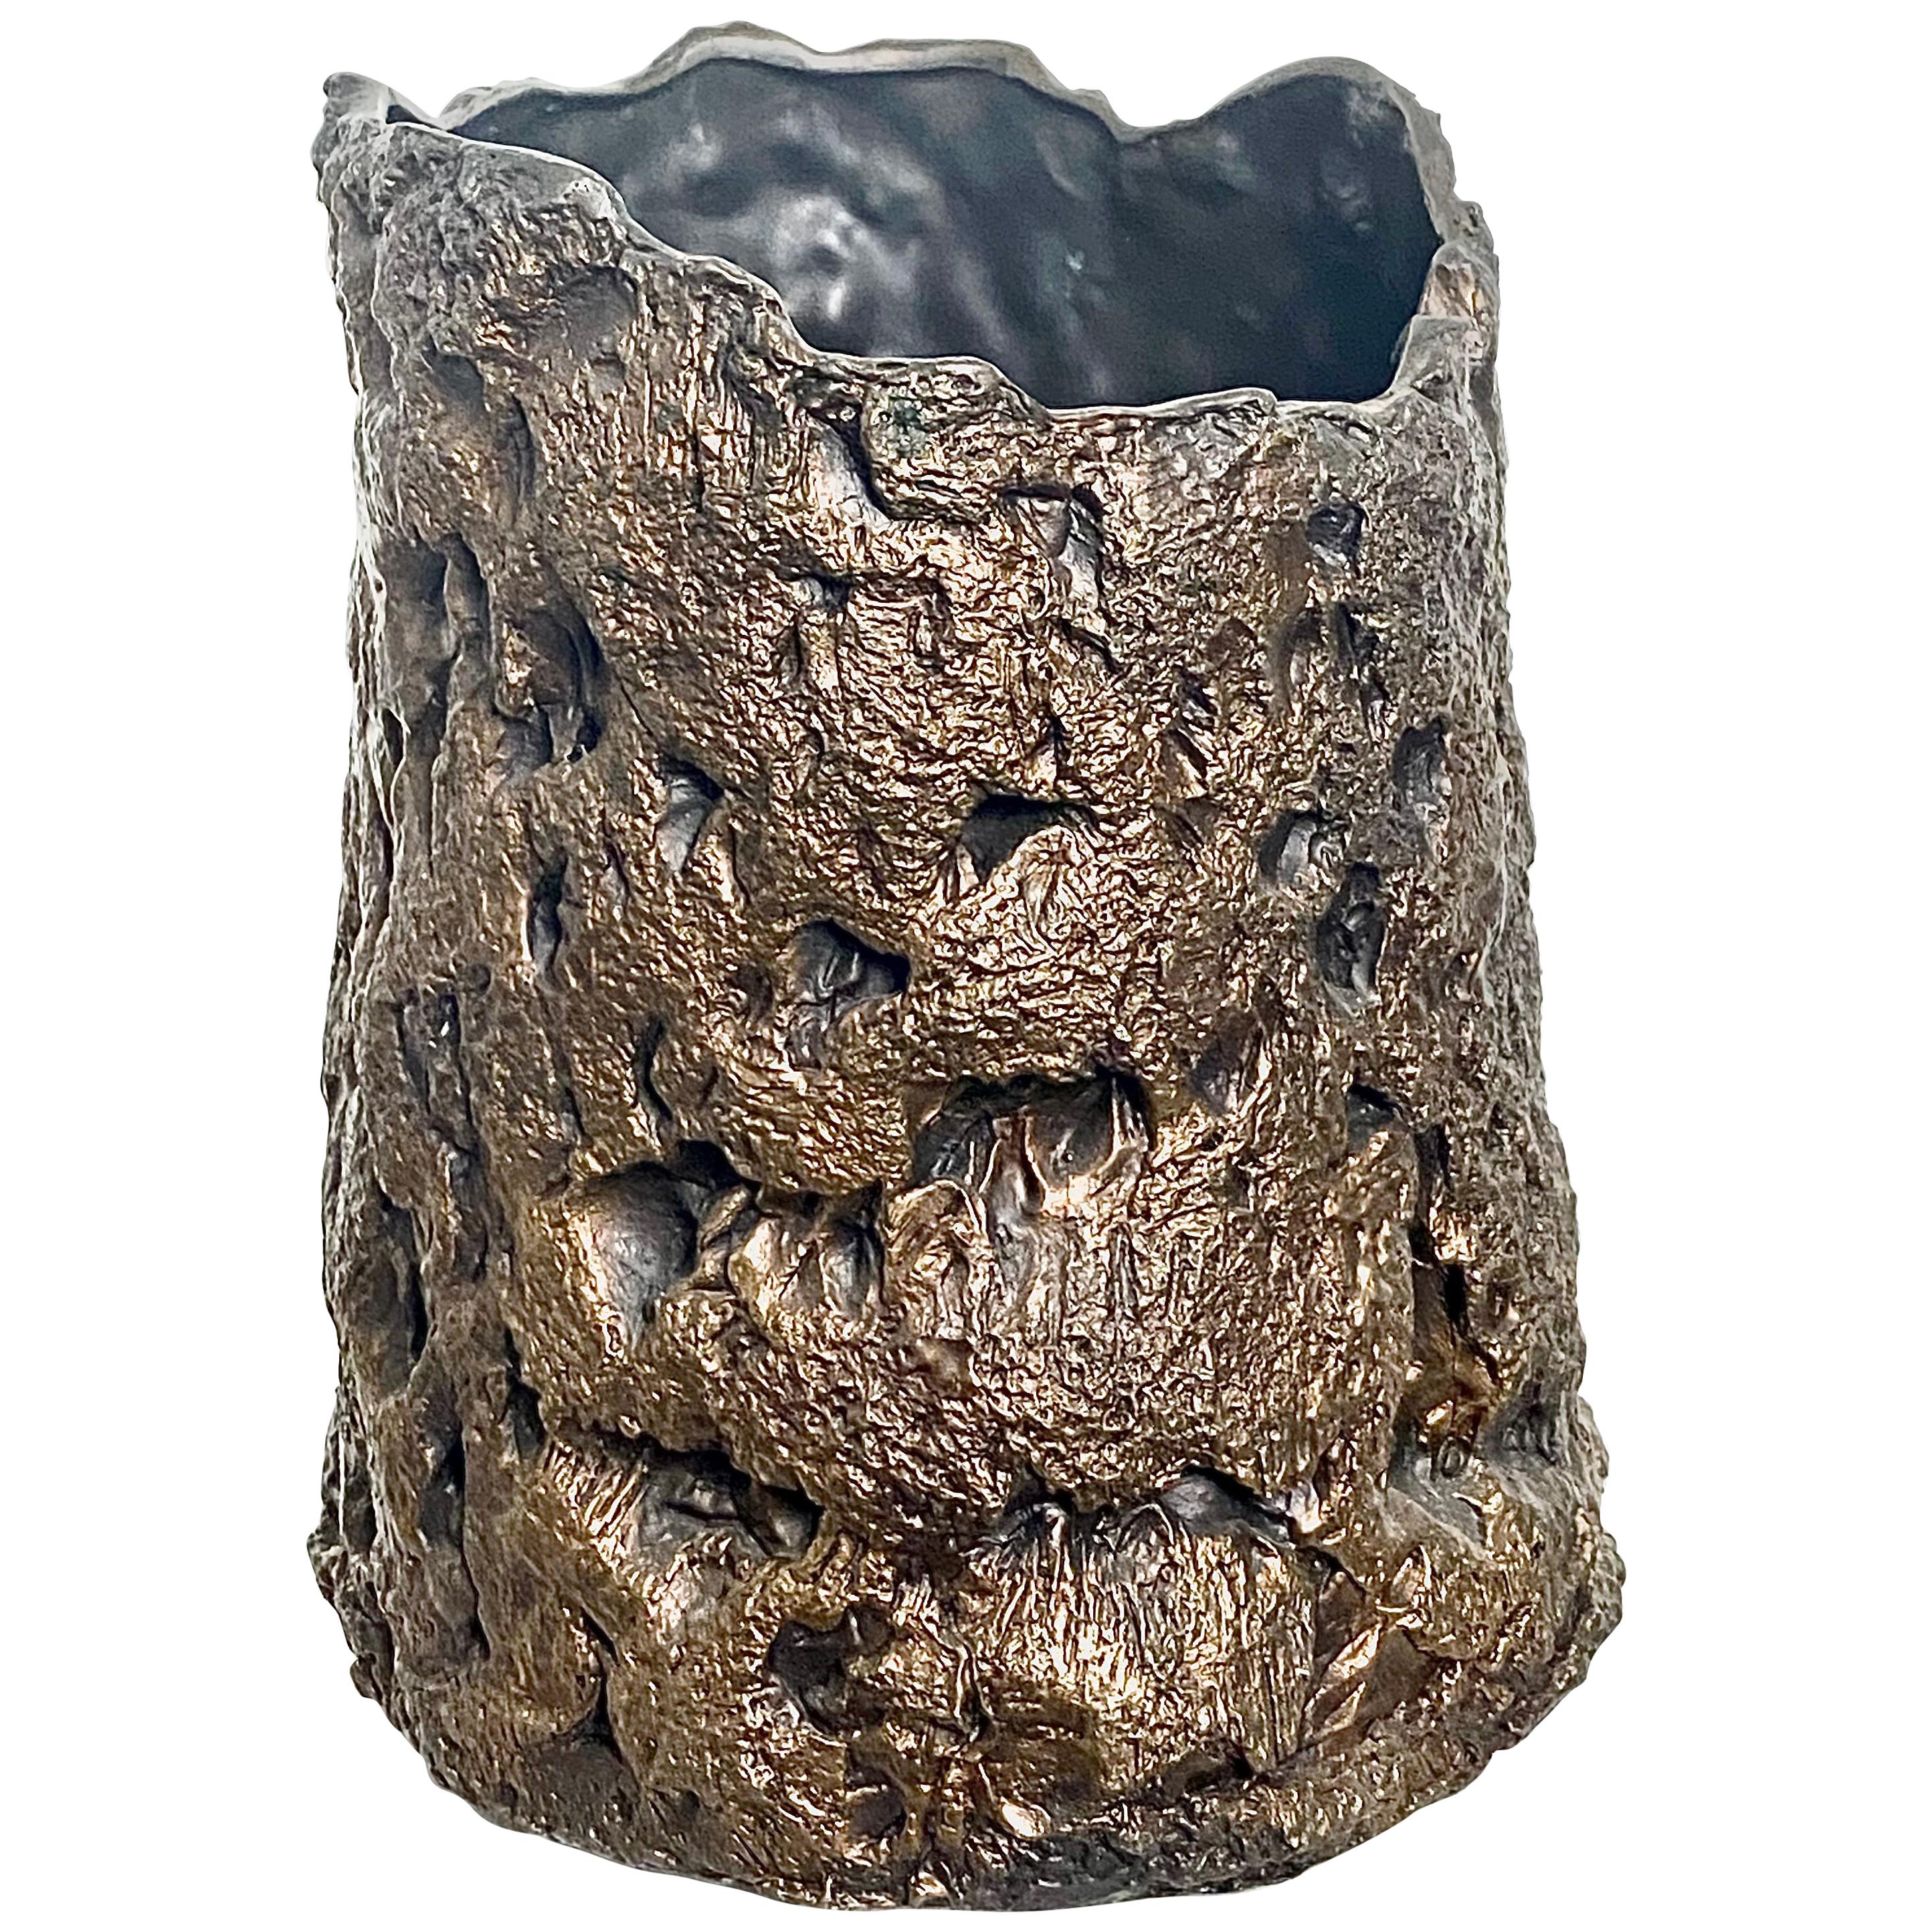  Sculptural Bronze Vase, 21st Century by Mattia Biagi